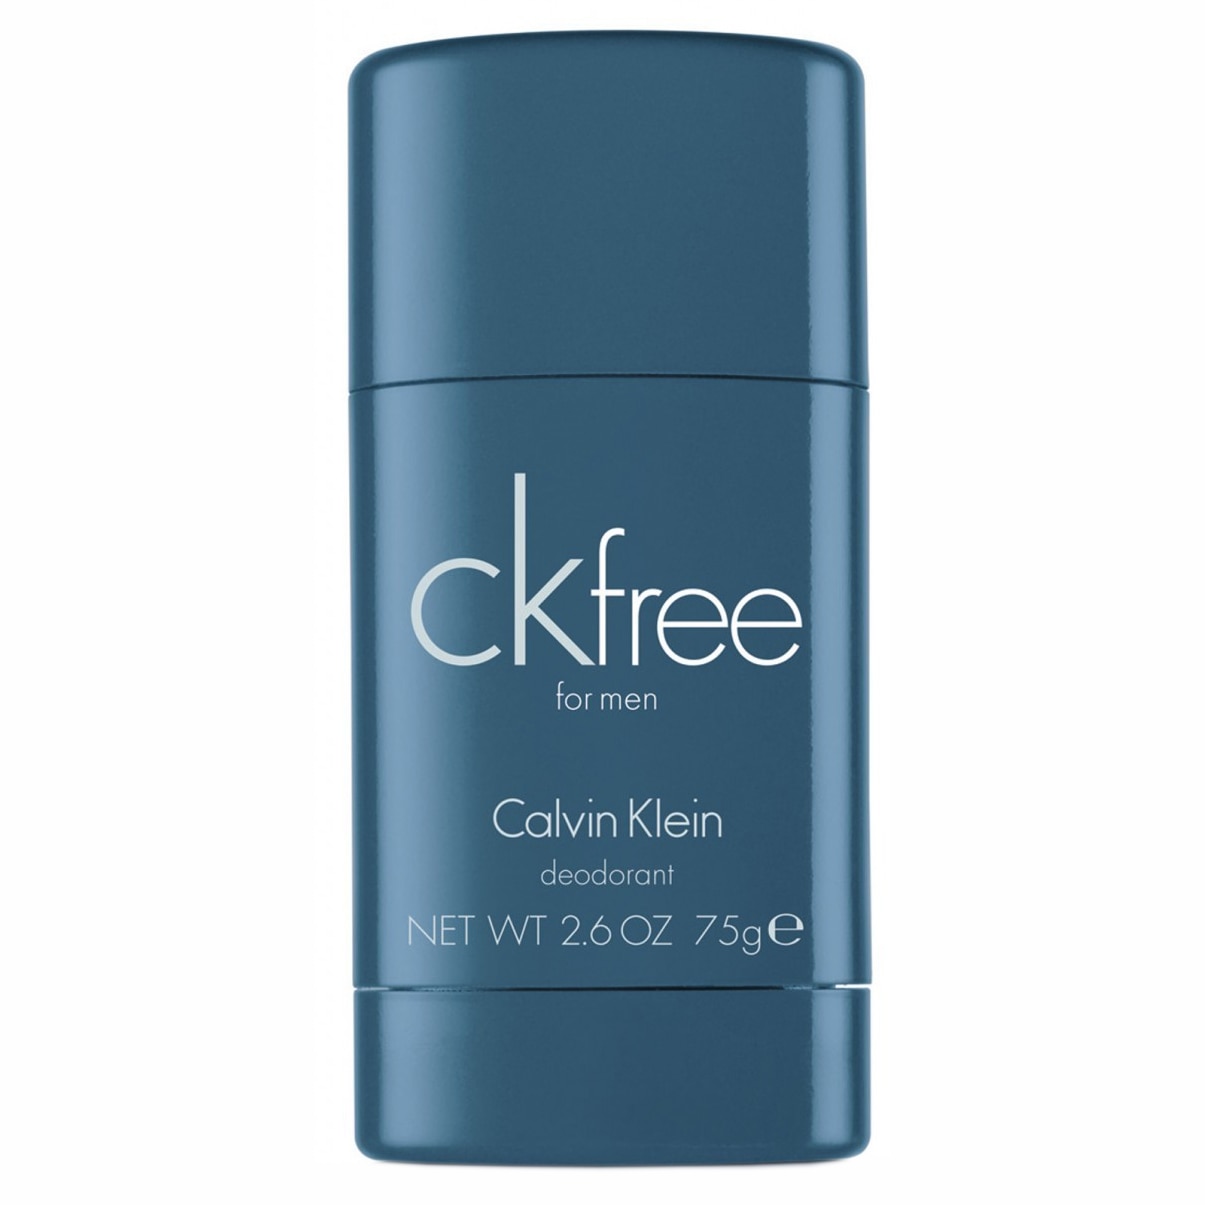 Calvin Klein CK Free férfi ml stift, deo 75